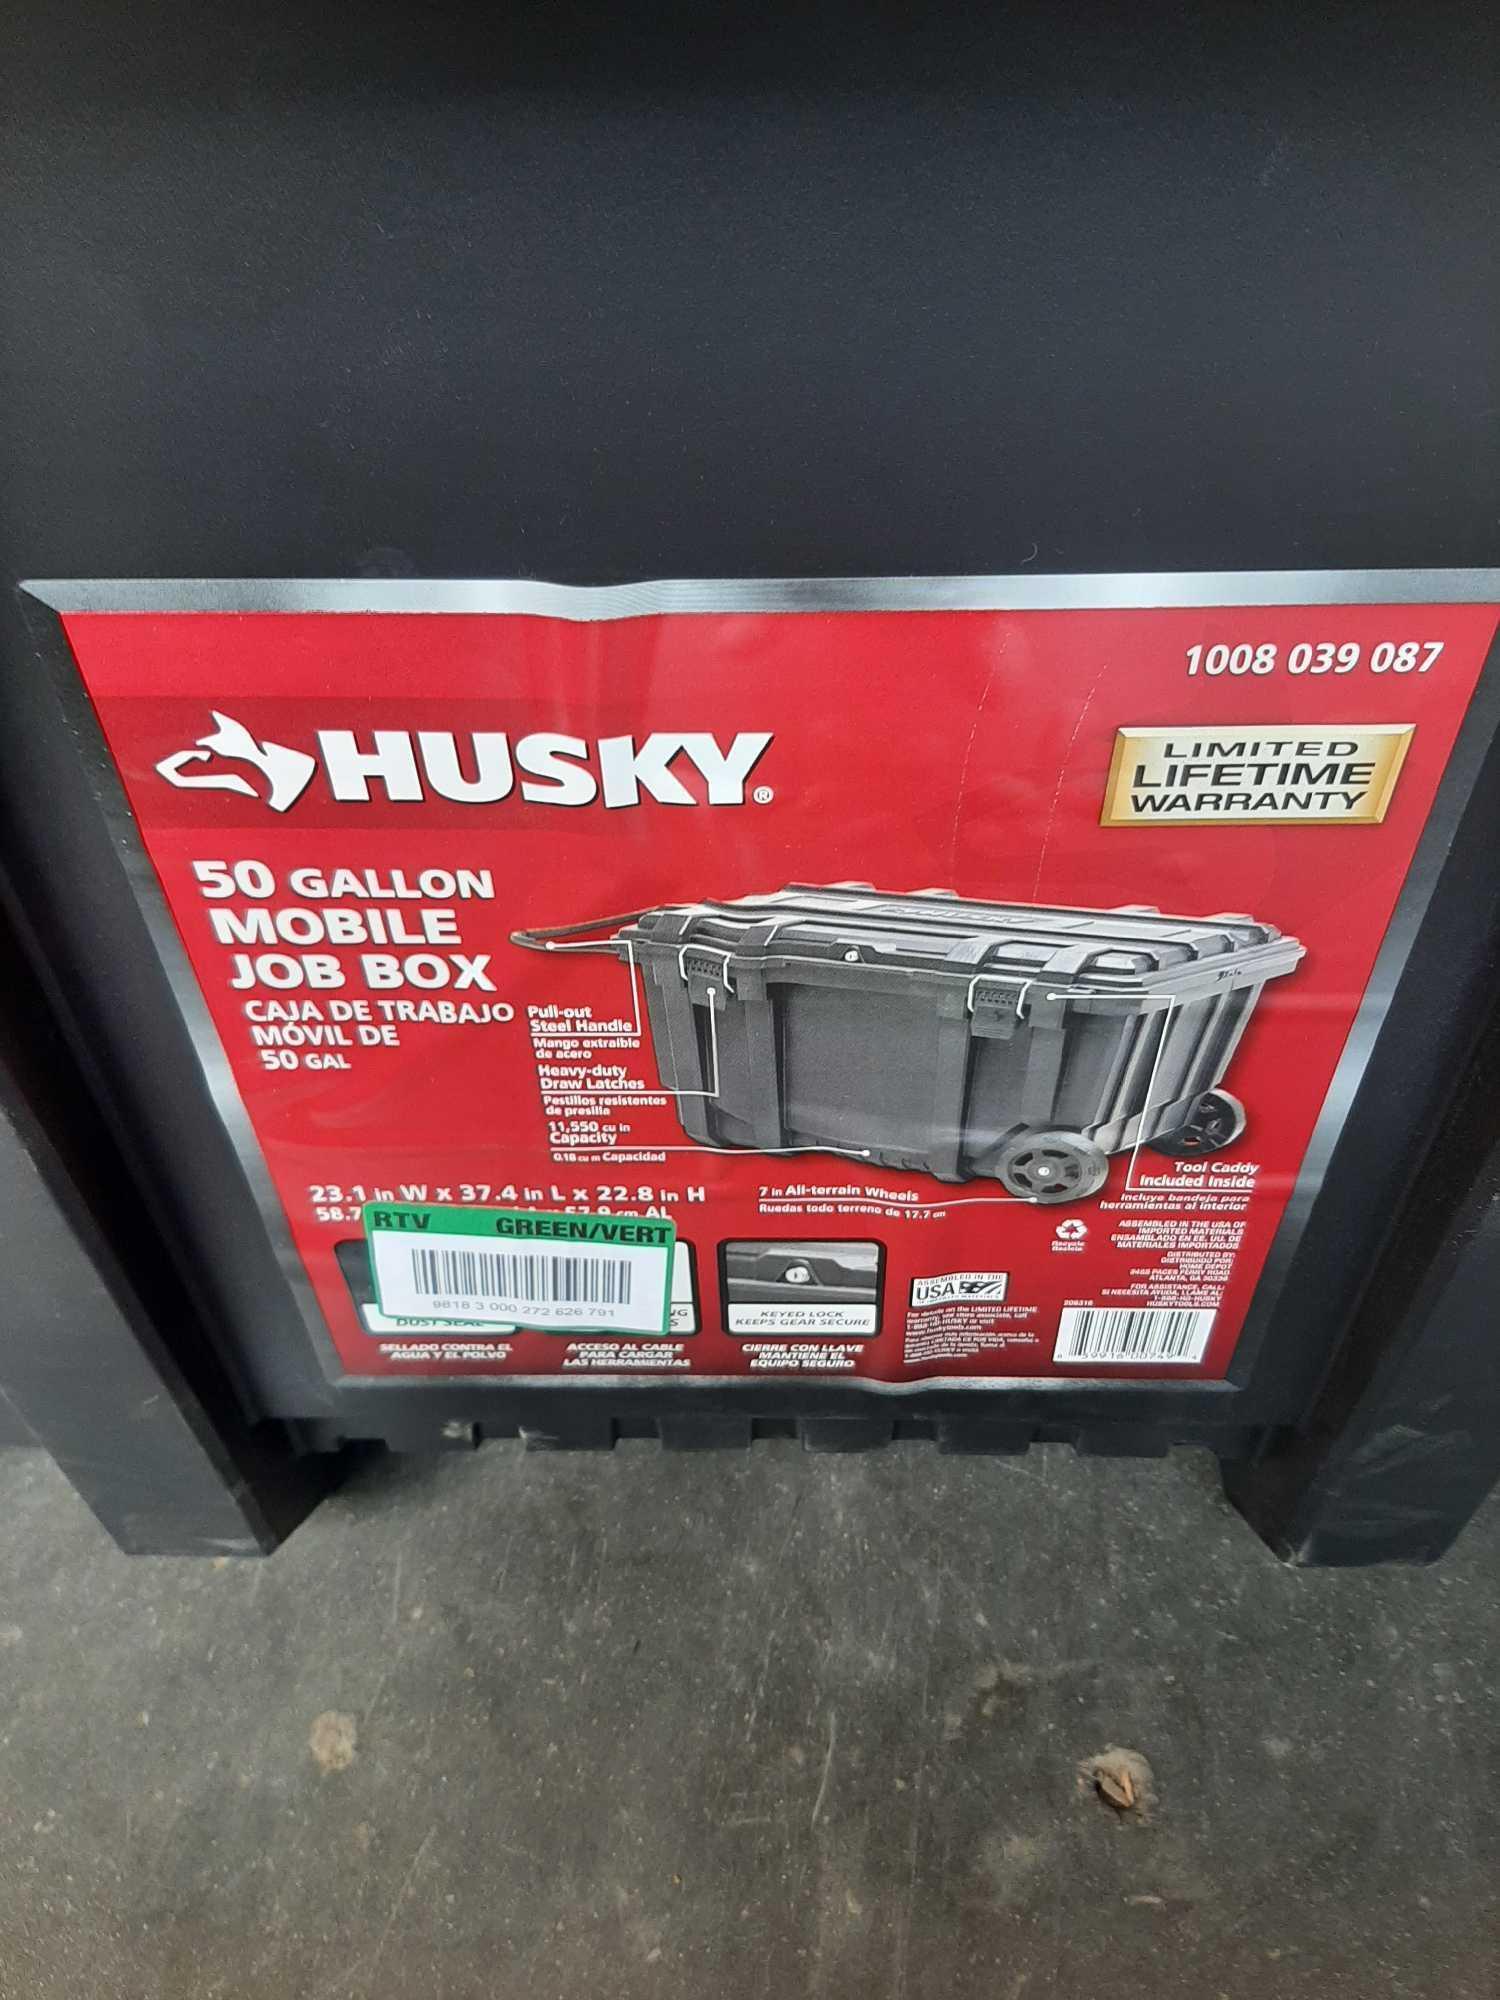 Husky 50 Gallon Mobile Job Box*MISSING PARTS*